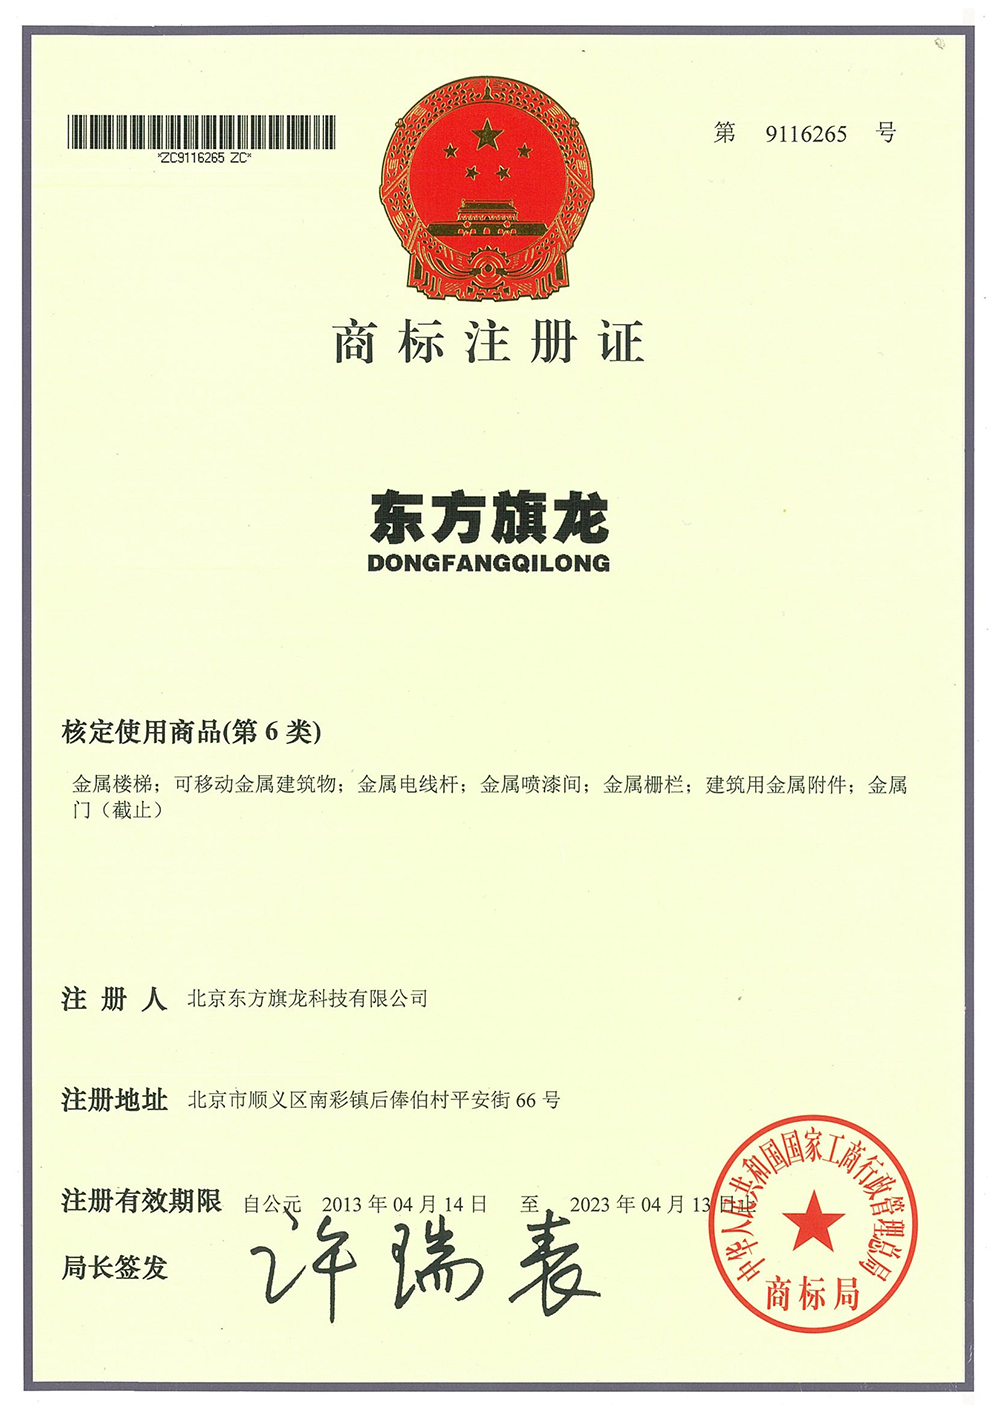 Dongfang Qilong trademark registration certificate